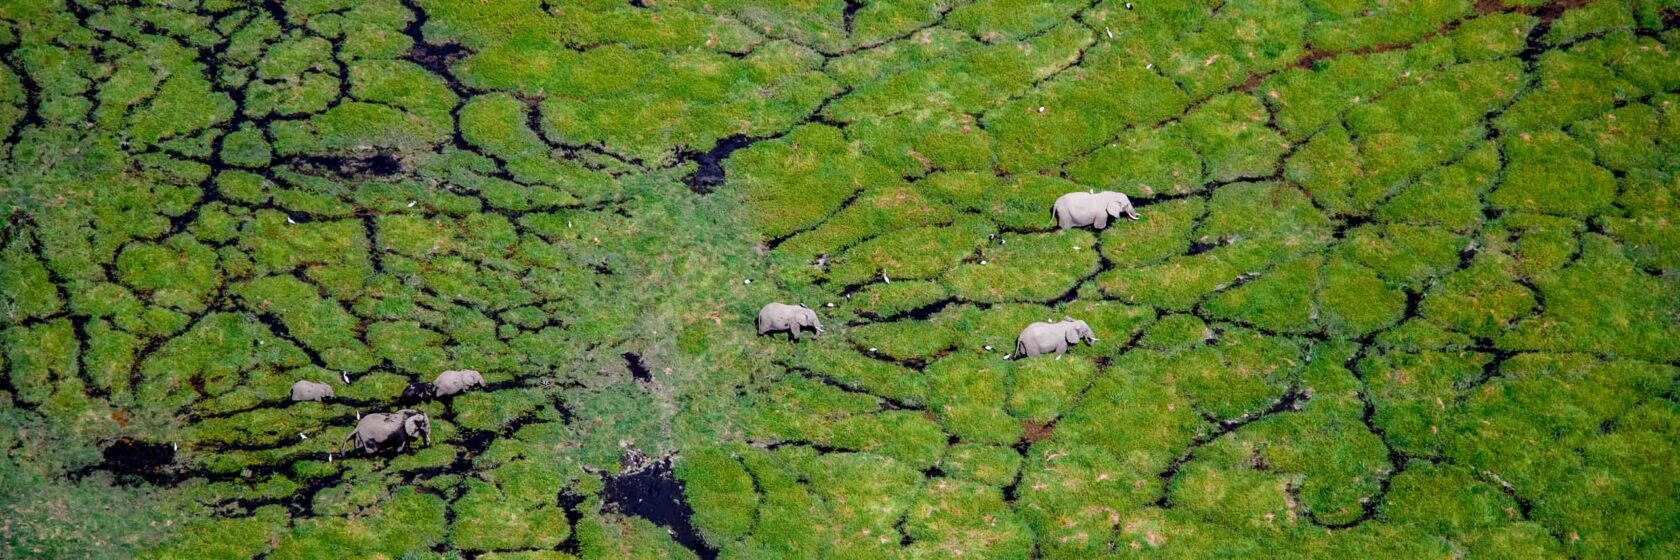 An aerial view of elephants walking across a green landscape in Africa.